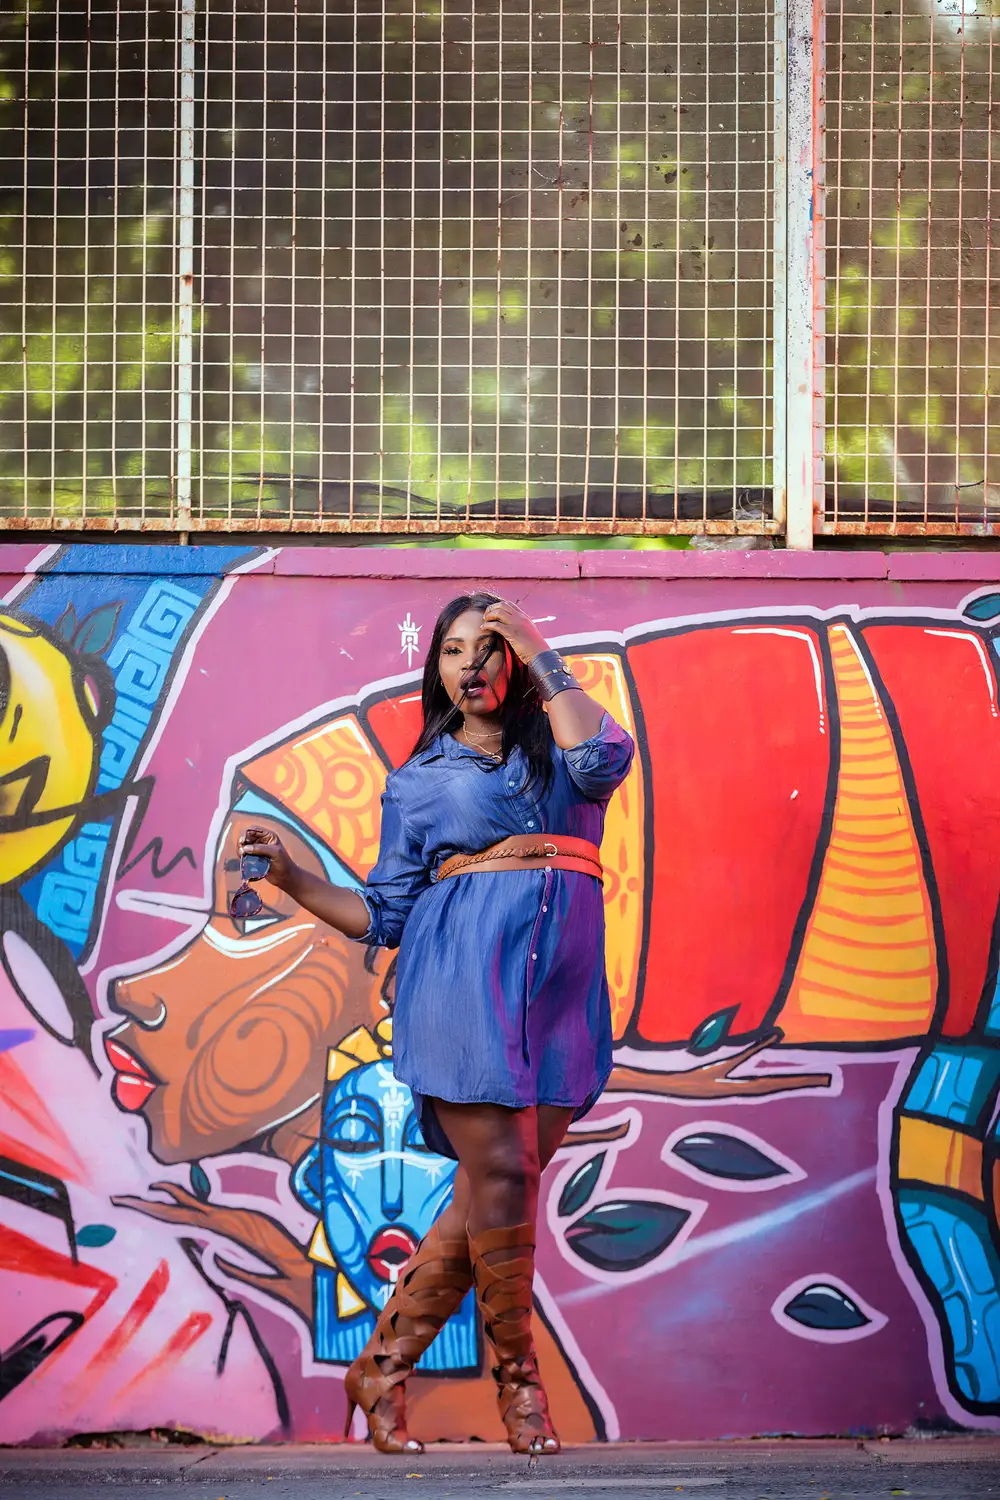 Woman posing in front of graffiti wall art